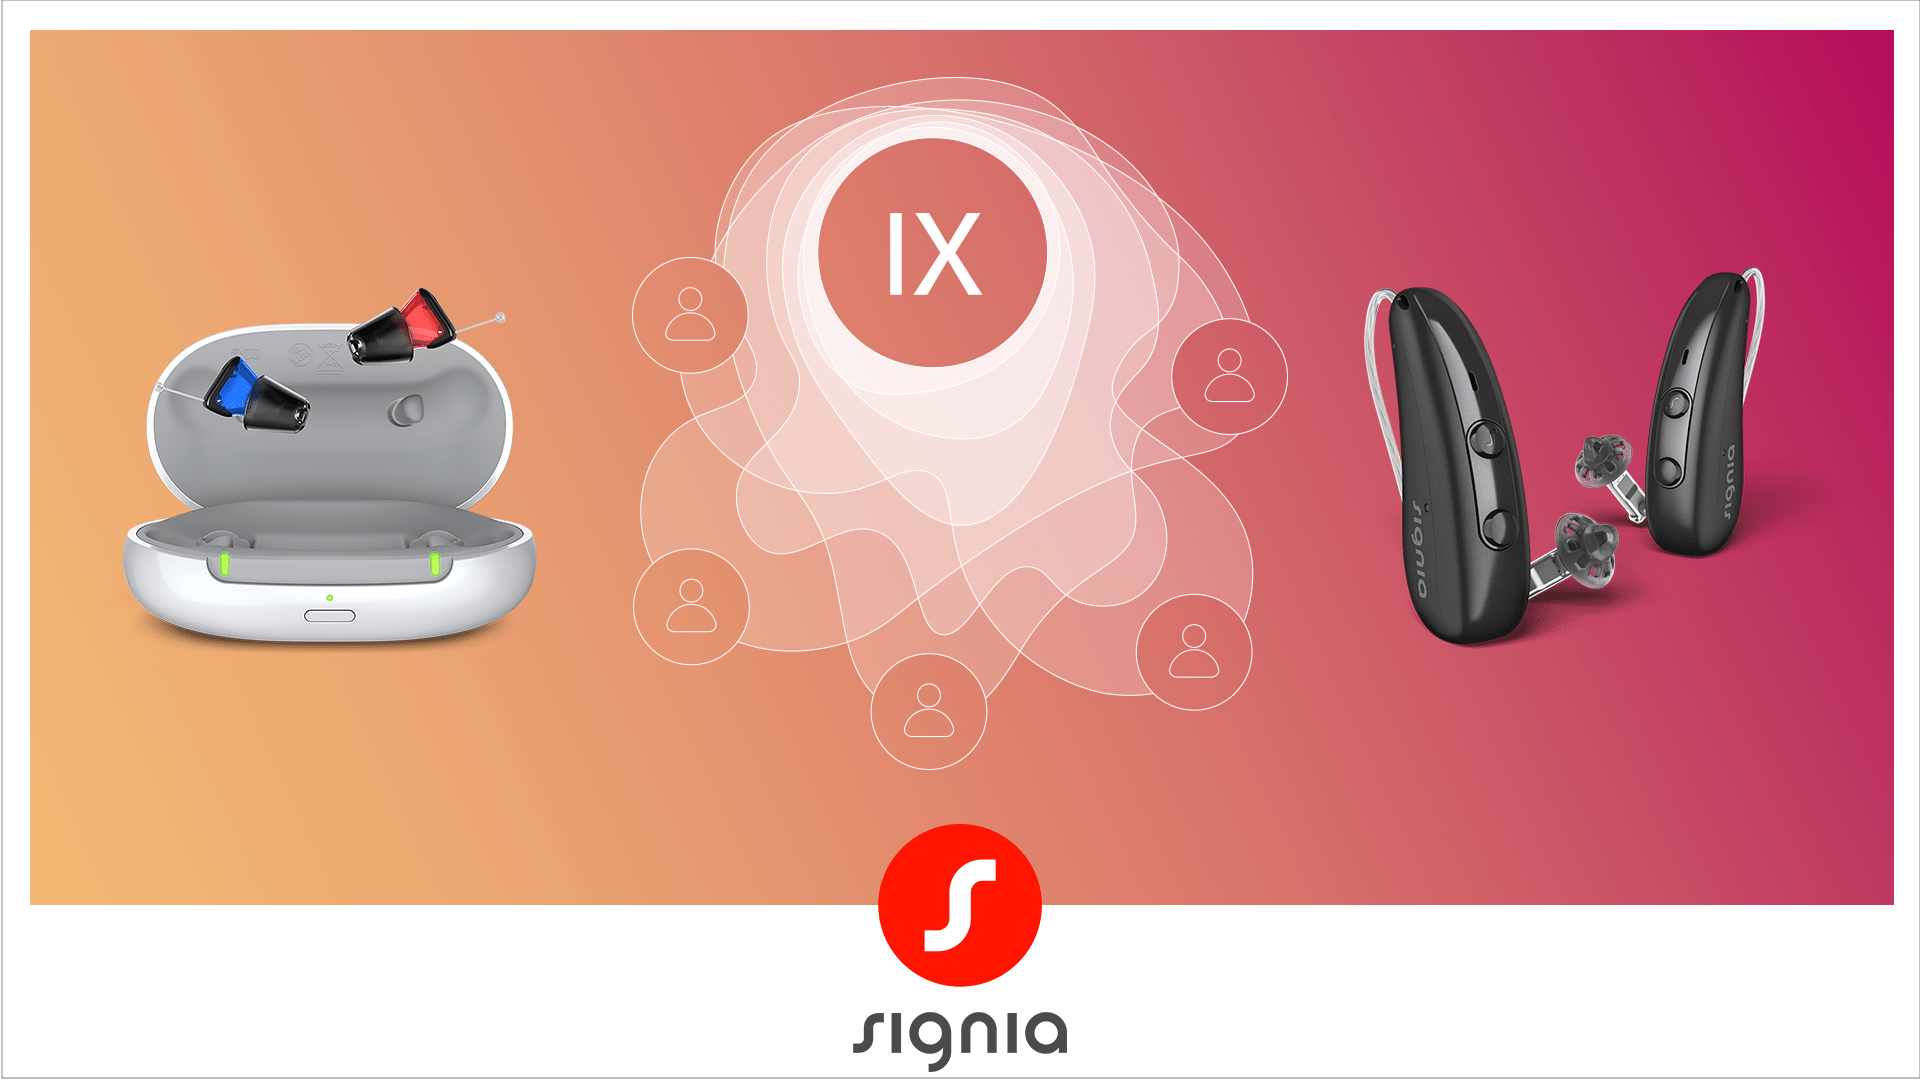 Nouvelles aides auditives Signia Silk Charge&Go IX, Pure Charge&Go IX et nouvelle plateforme integrated xperience